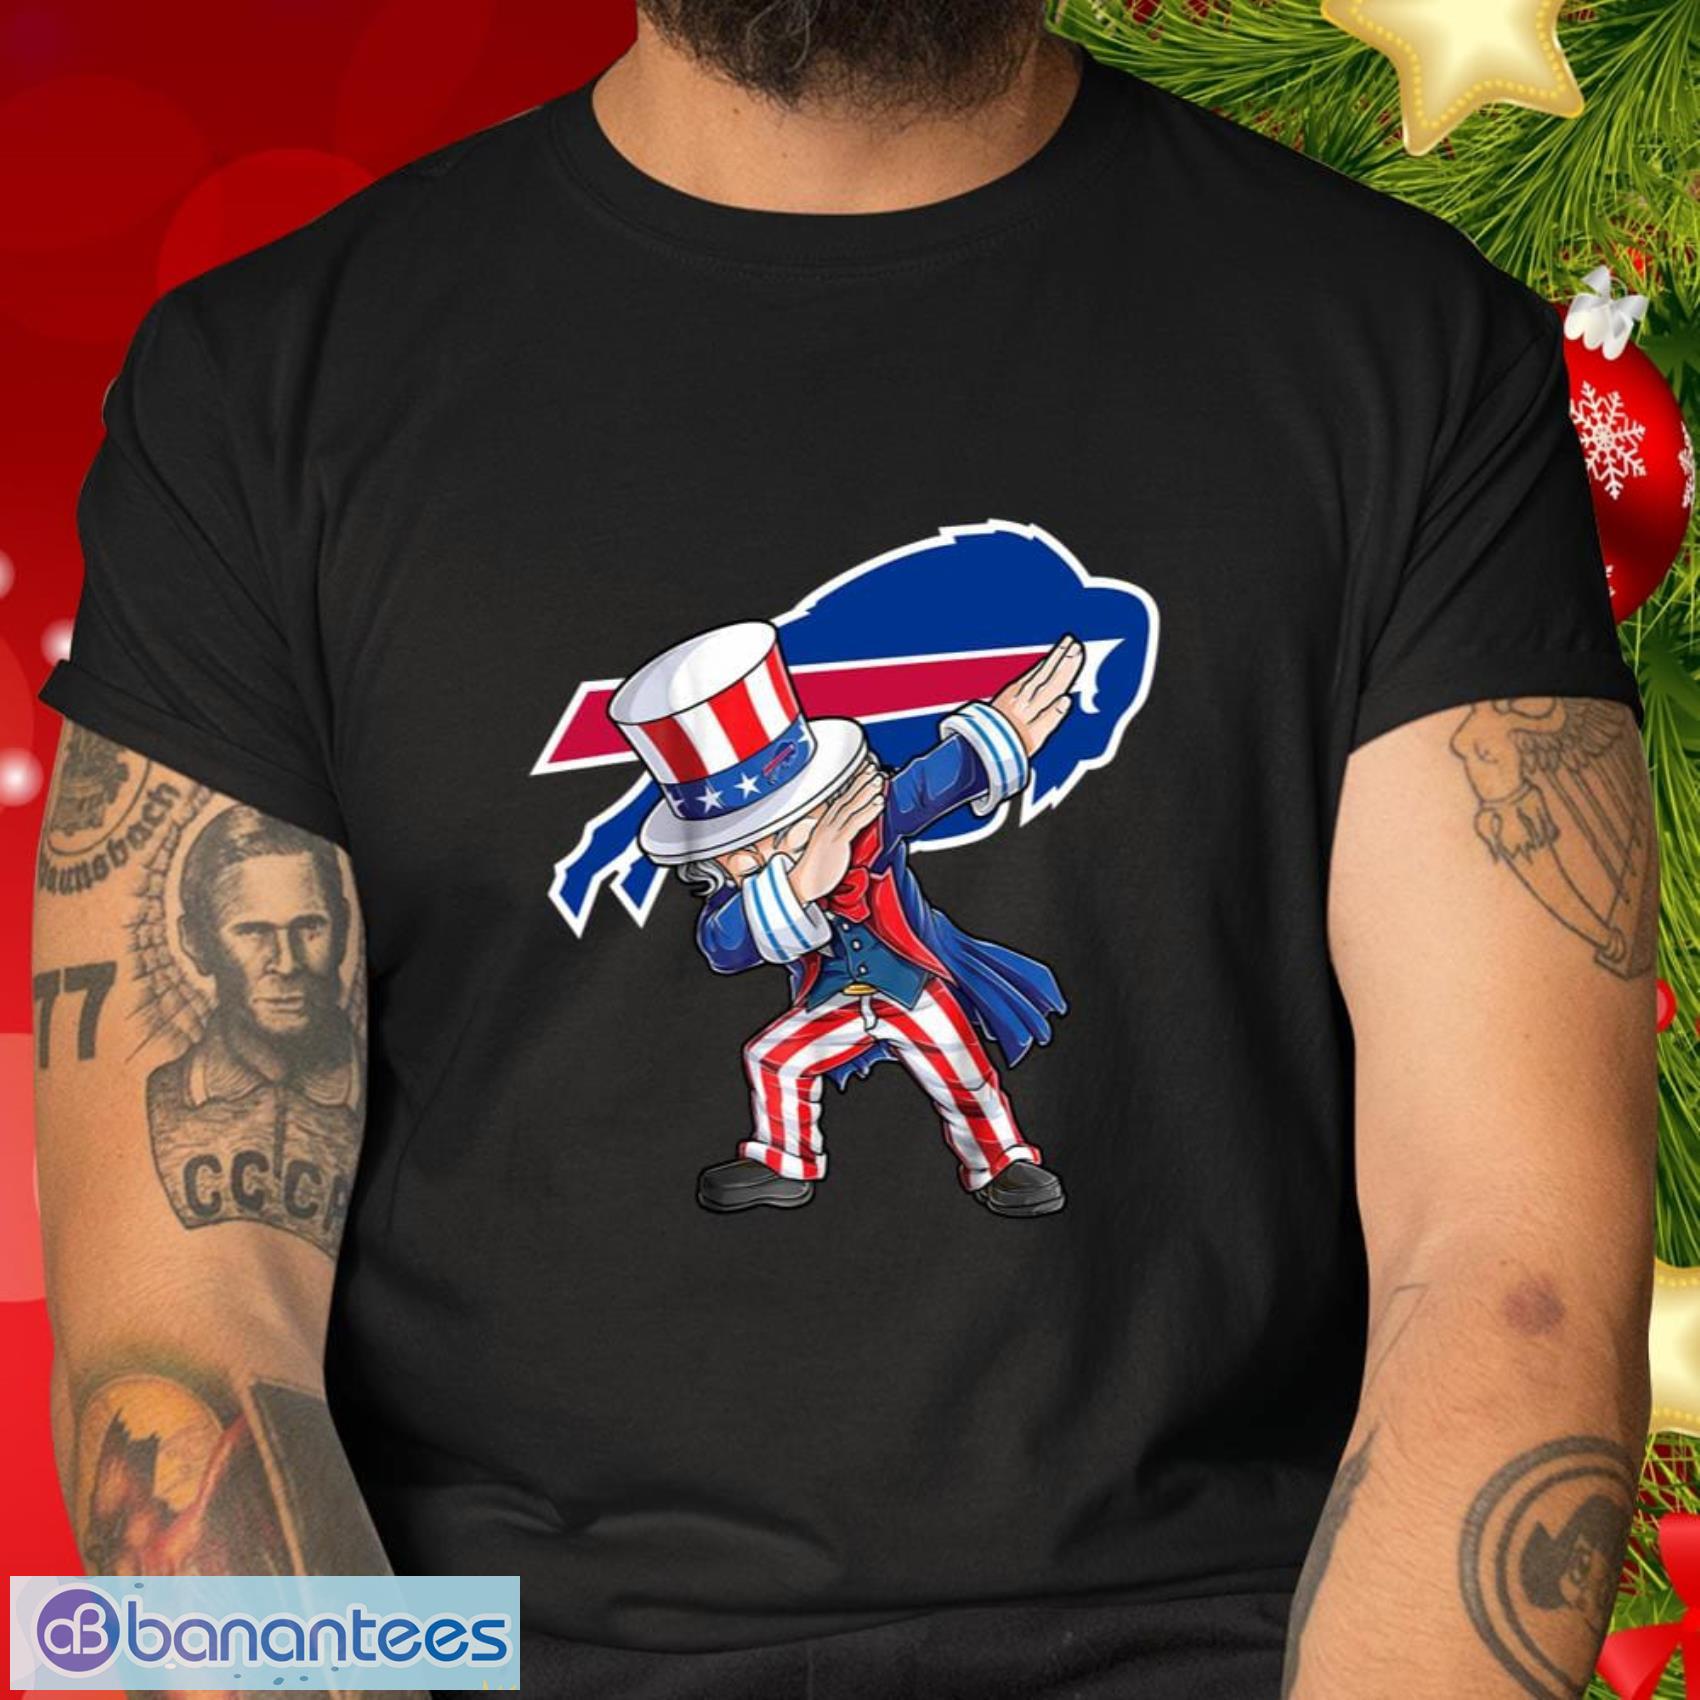 Buffalo Bills NFL Football Gift Fr Fans Dabbing Uncle Sam The Fourth of July T Shirt - Buffalo Bills NFL Football Dabbing Uncle Sam The Fourth of July T Shirt_2